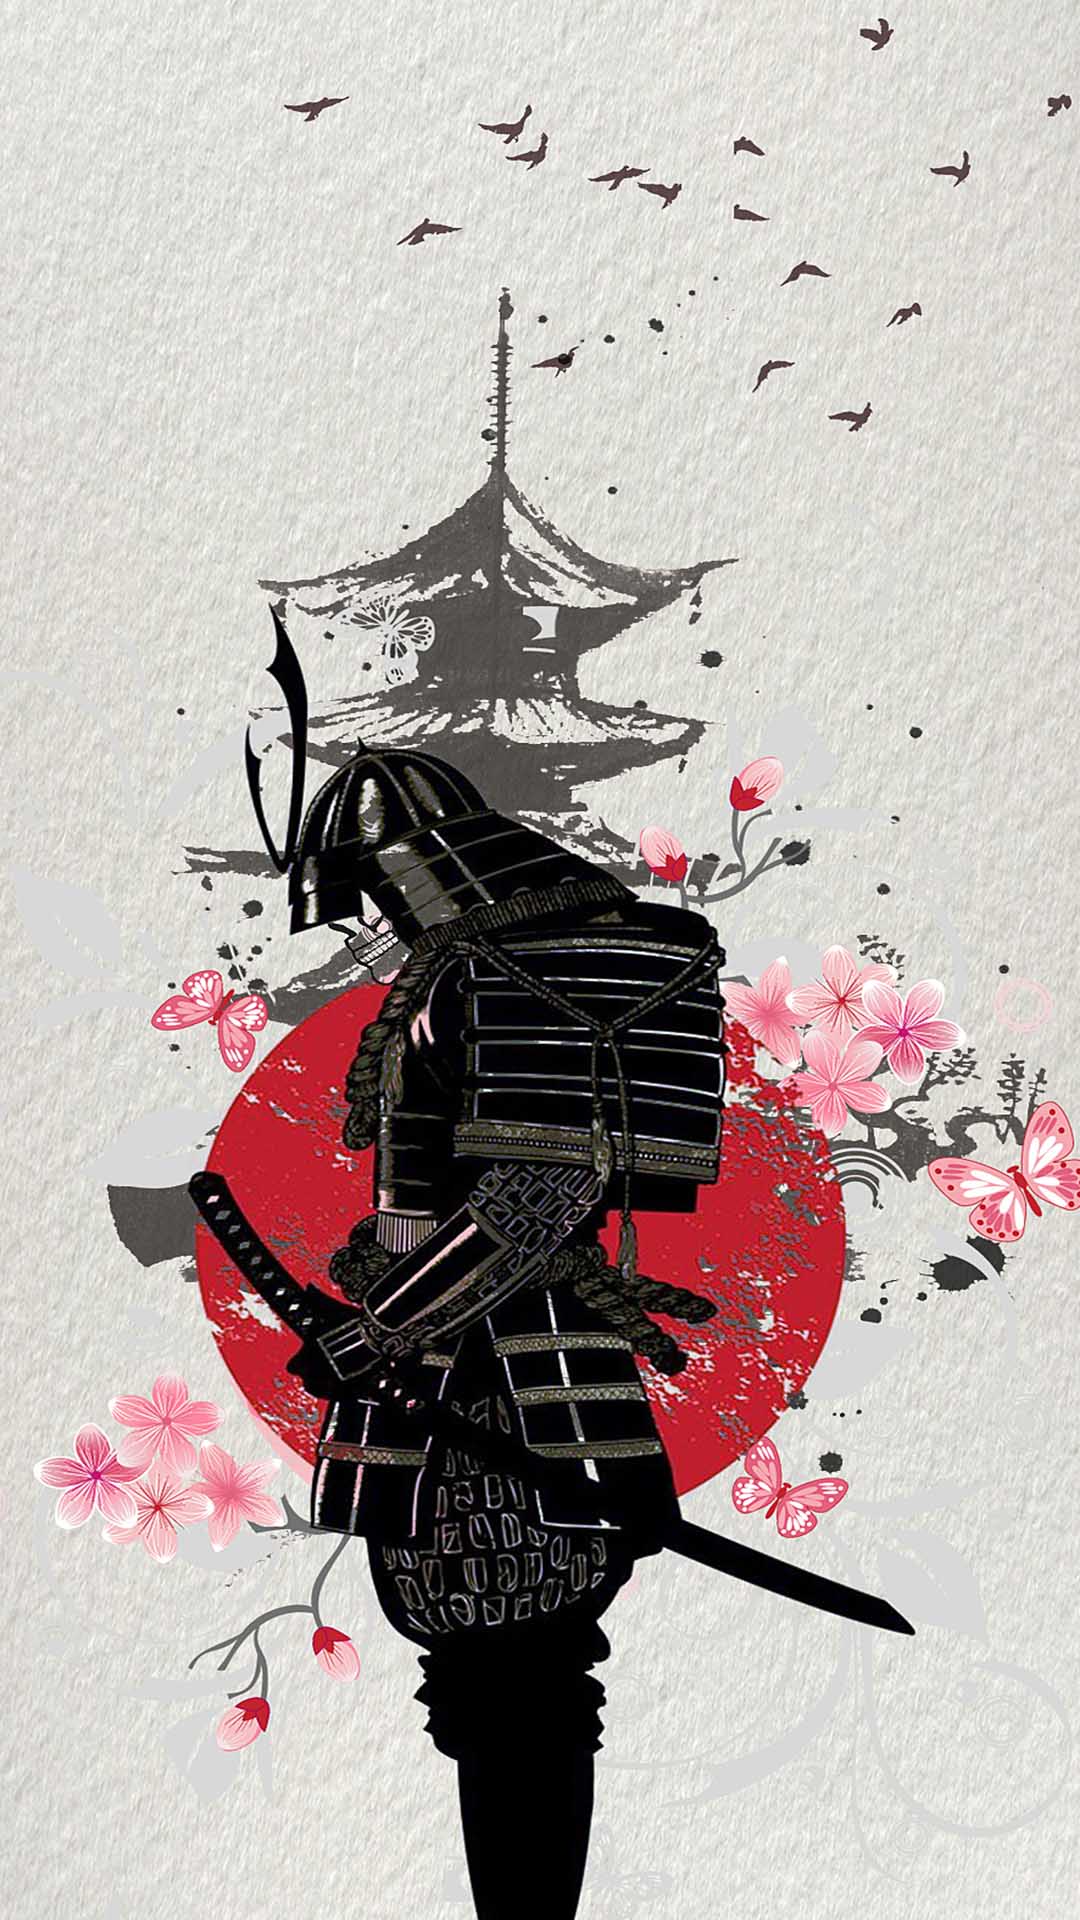 Fondos de pantalla de samurai - FondosMil